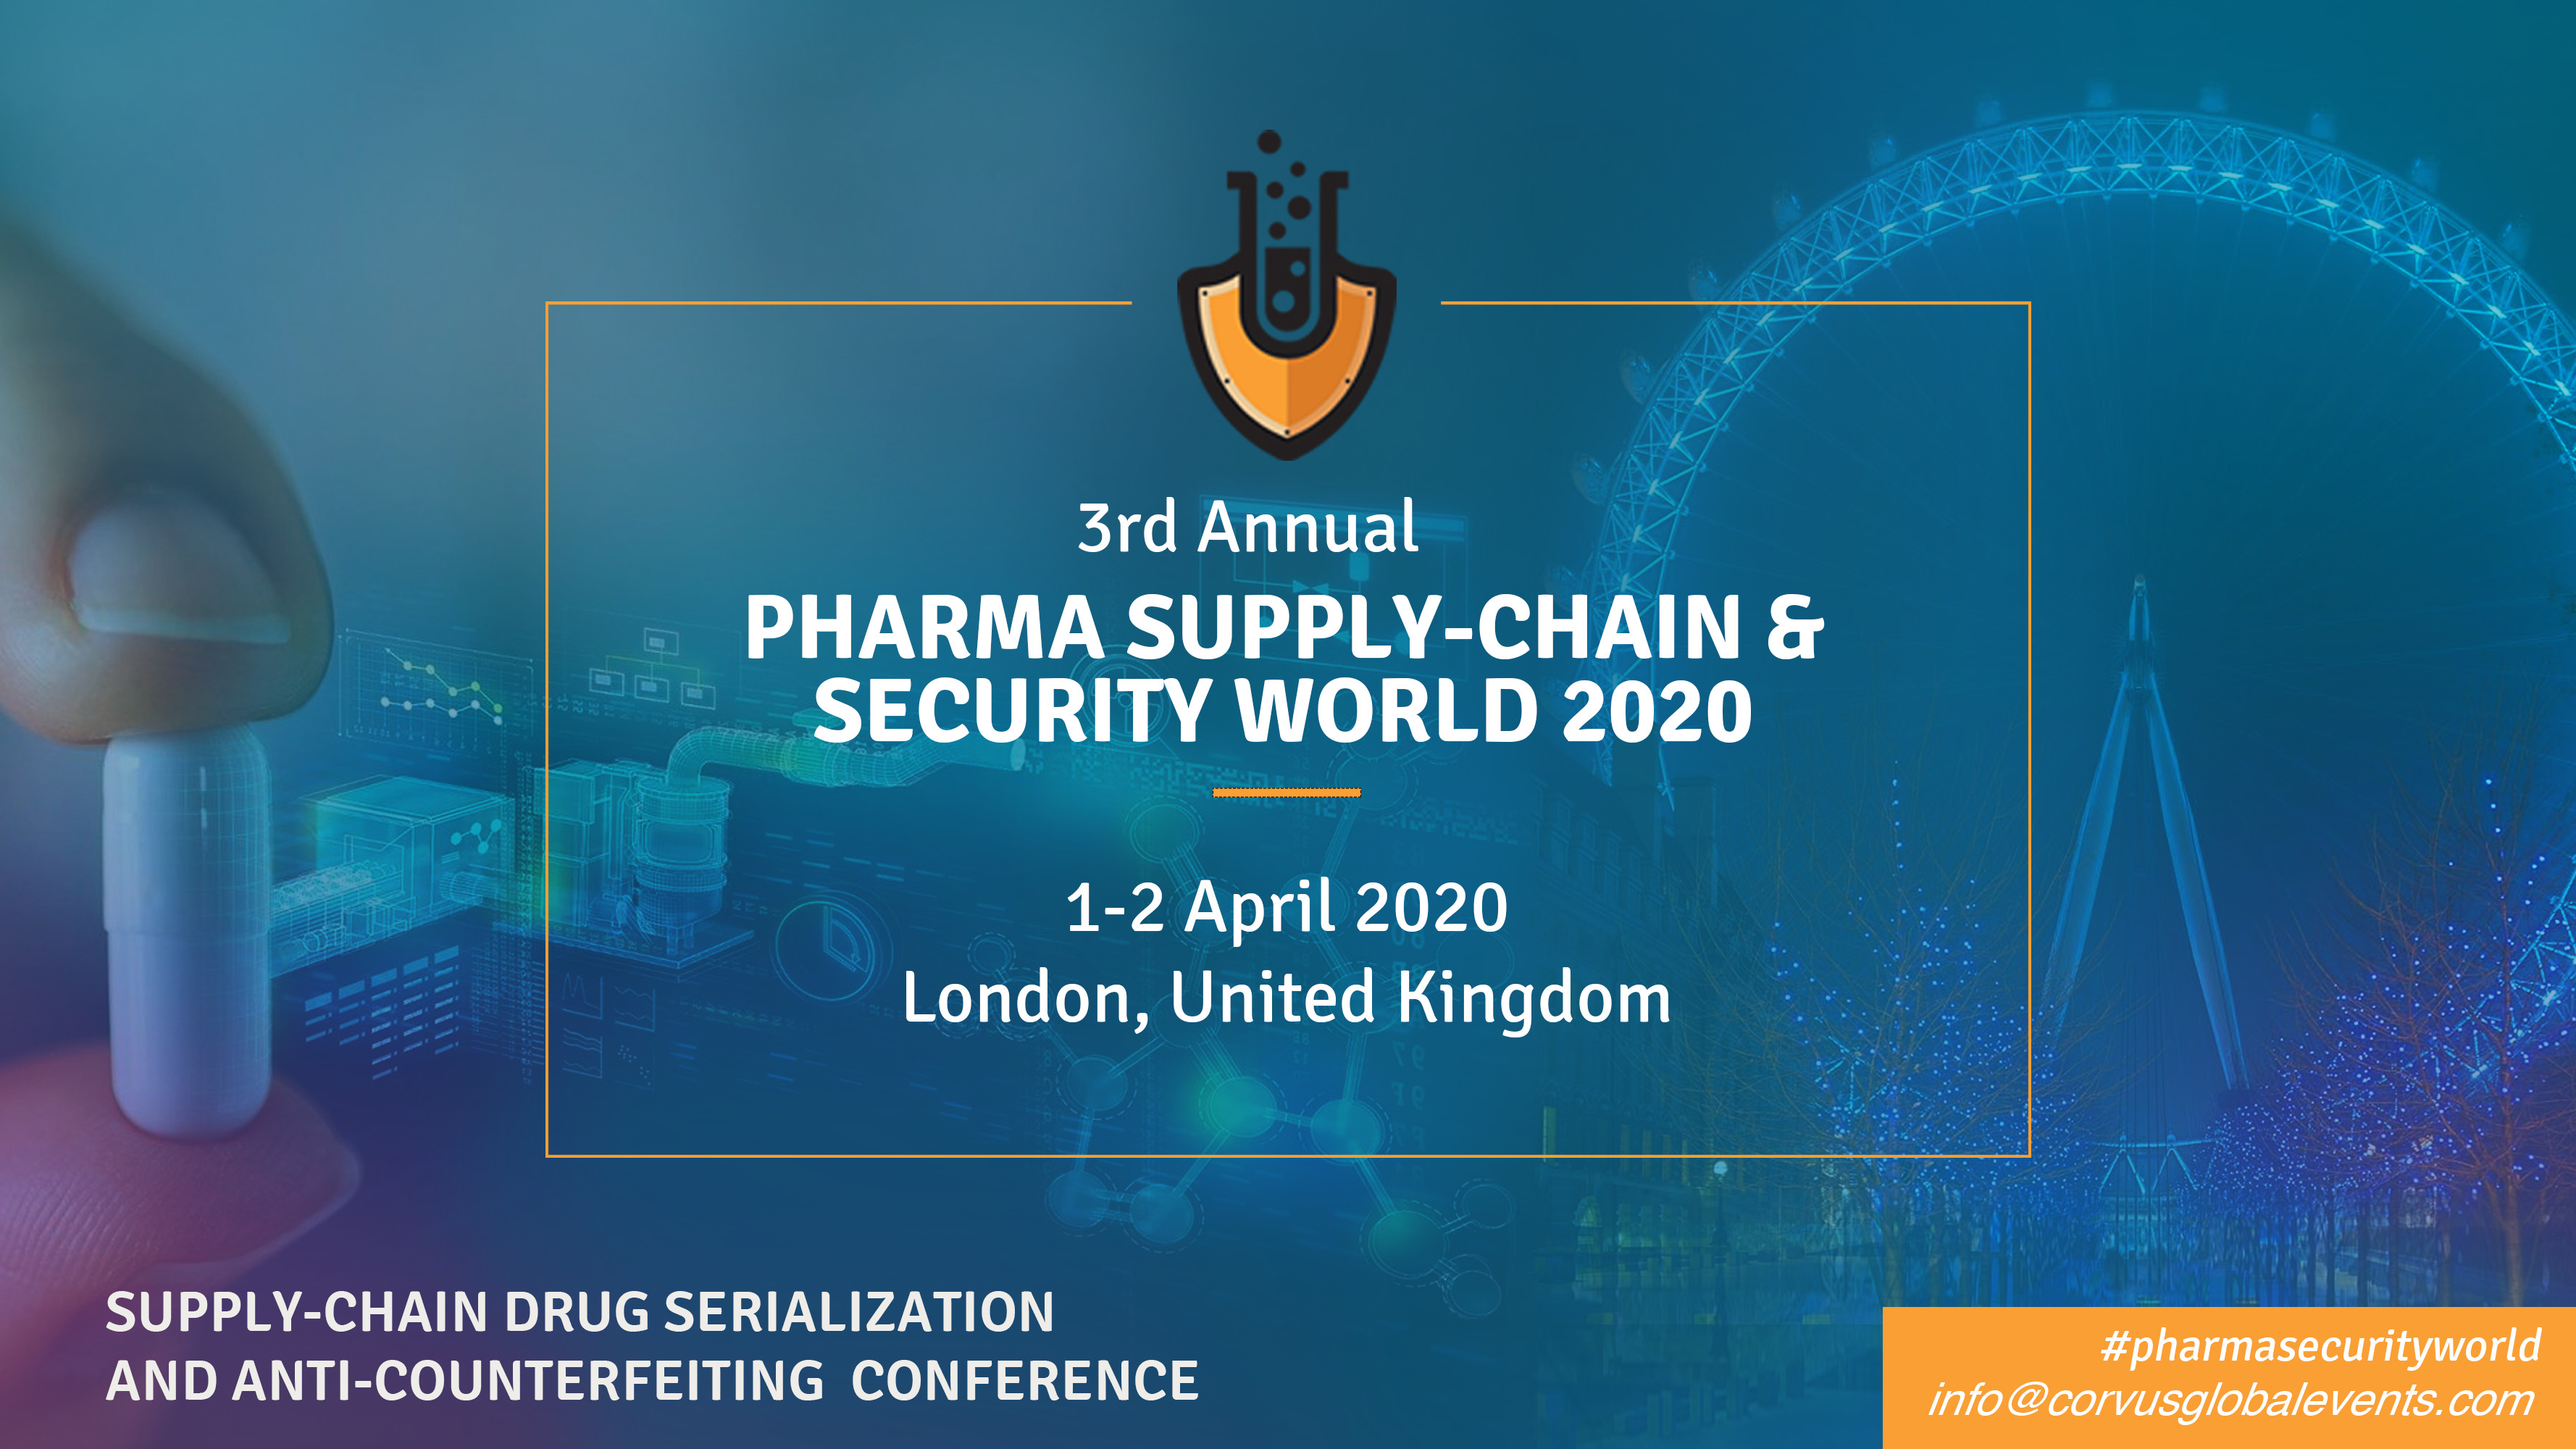 3rd Annual Pharma Supply-Chain & Security World 2020, London, United Kingdom